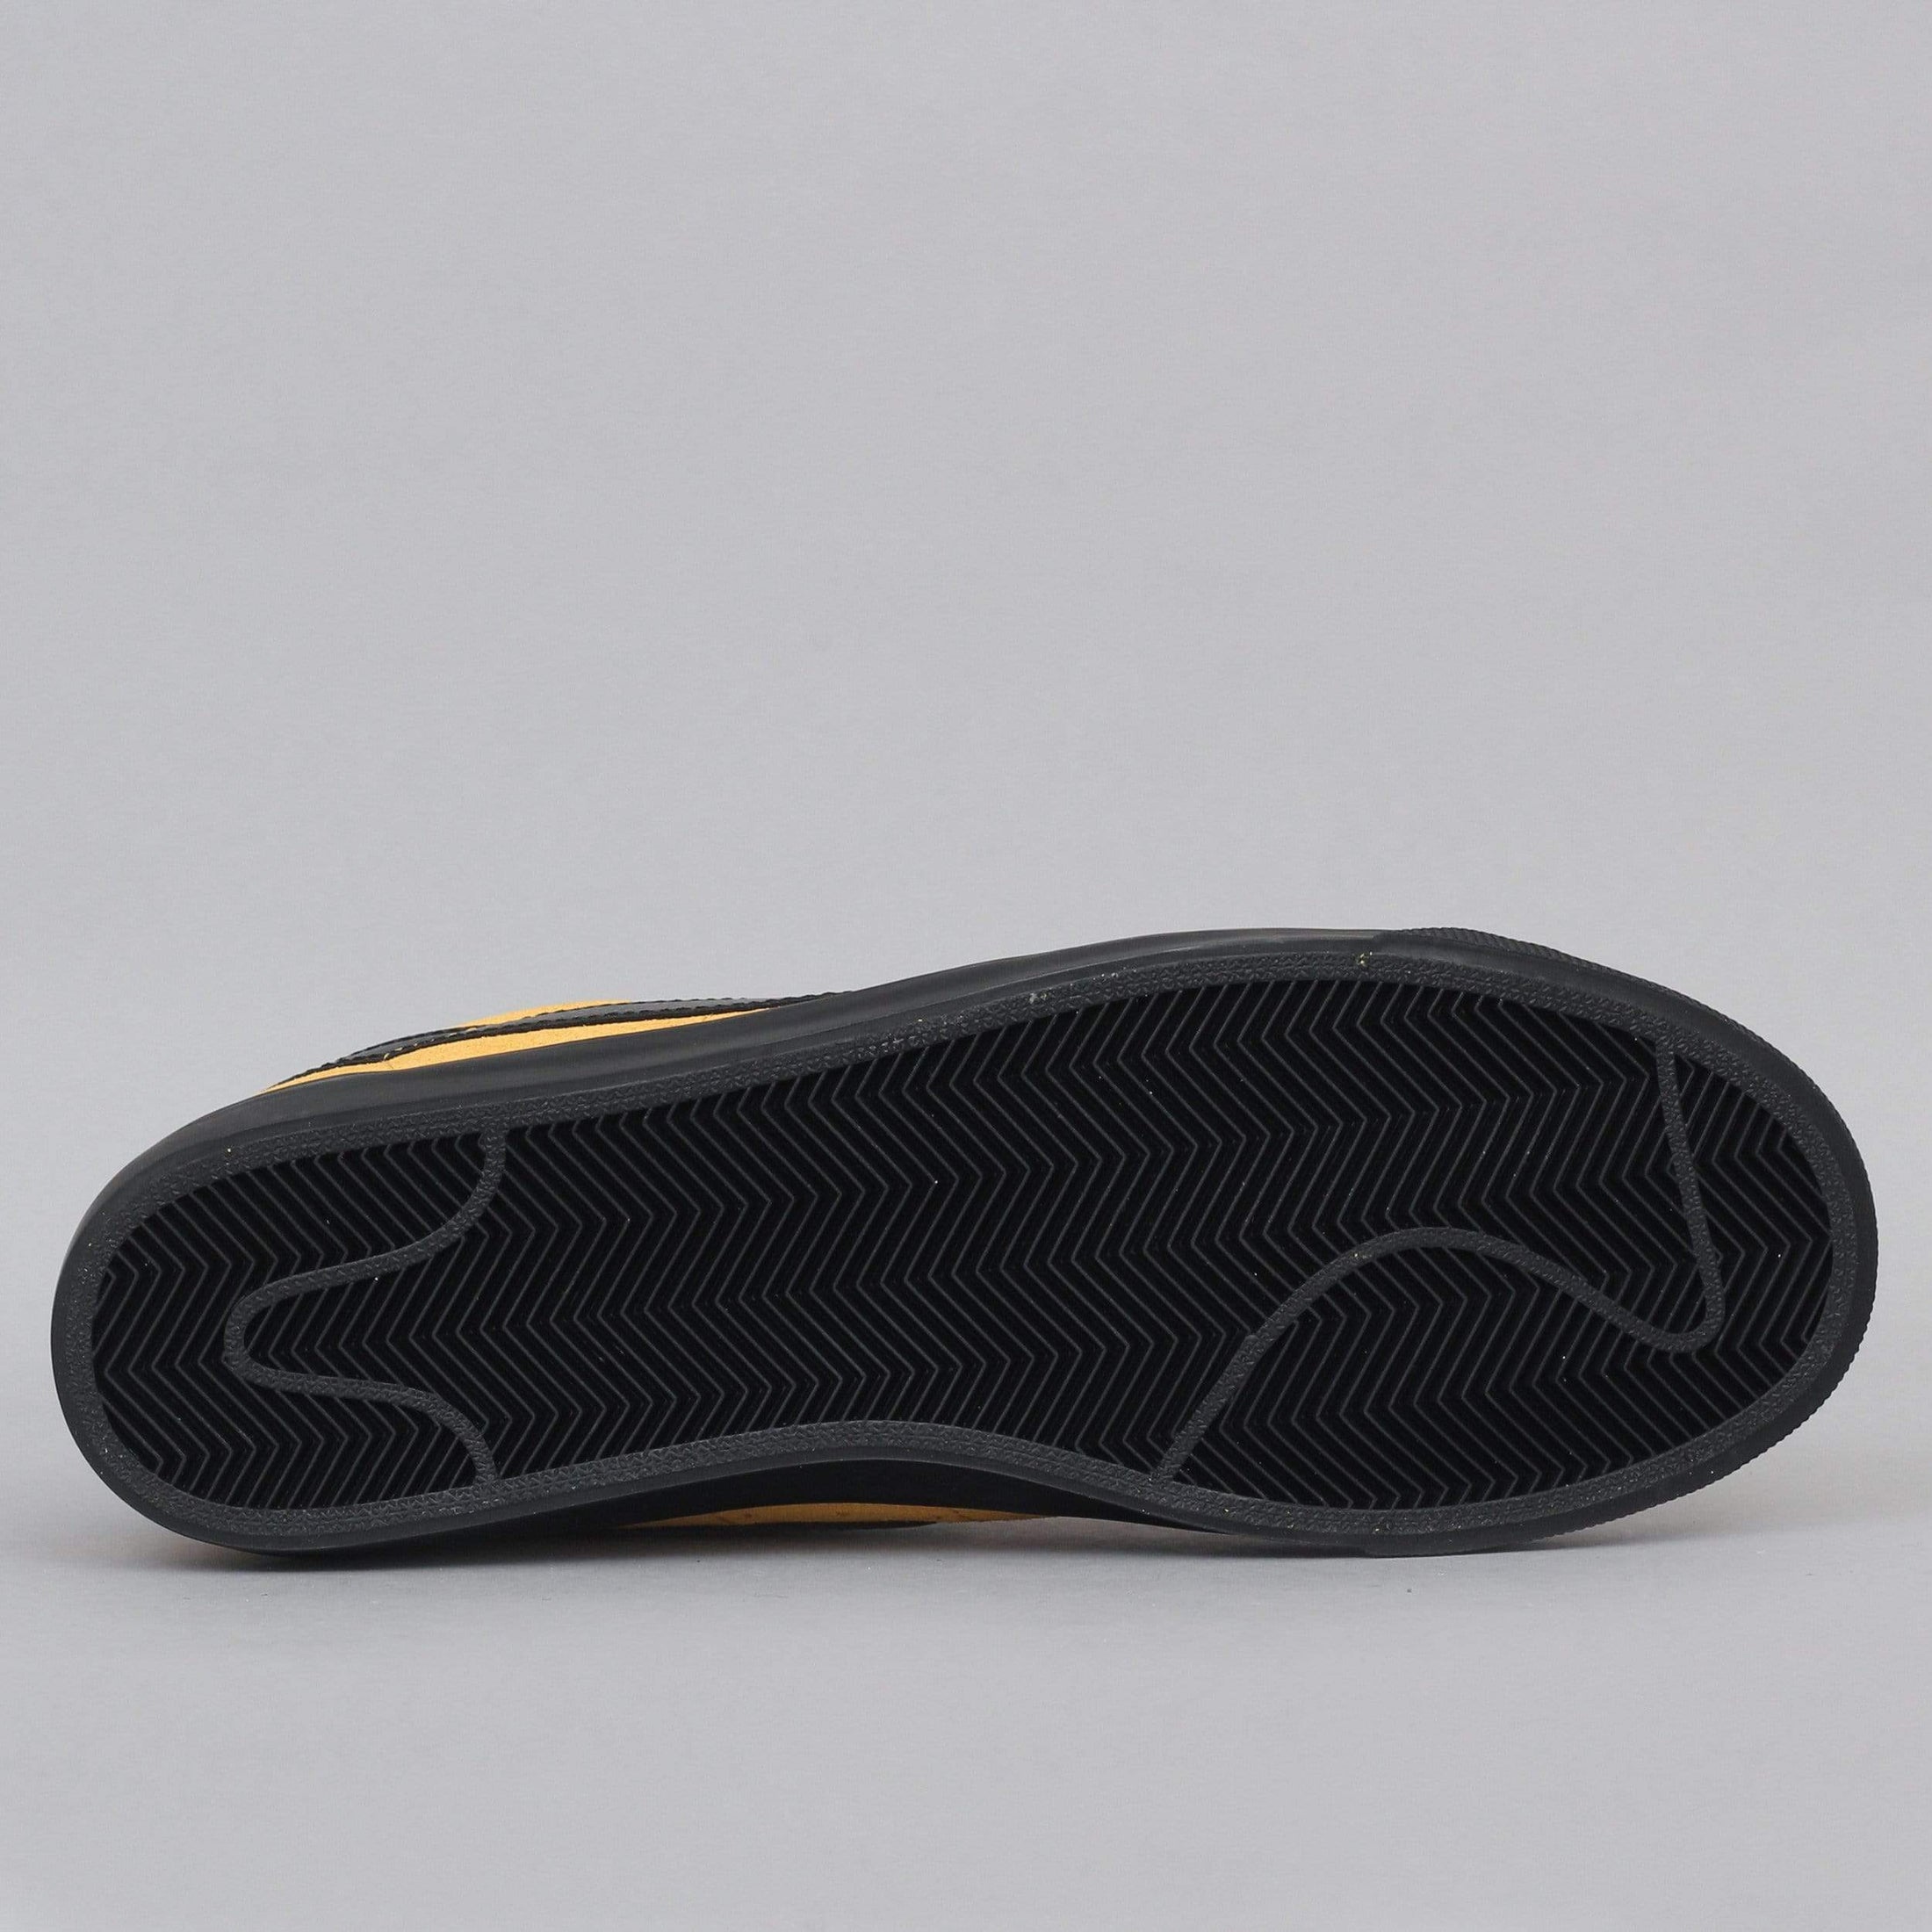 Nike SB Blazer Low GT Shoes University Gold / Black - University Gold